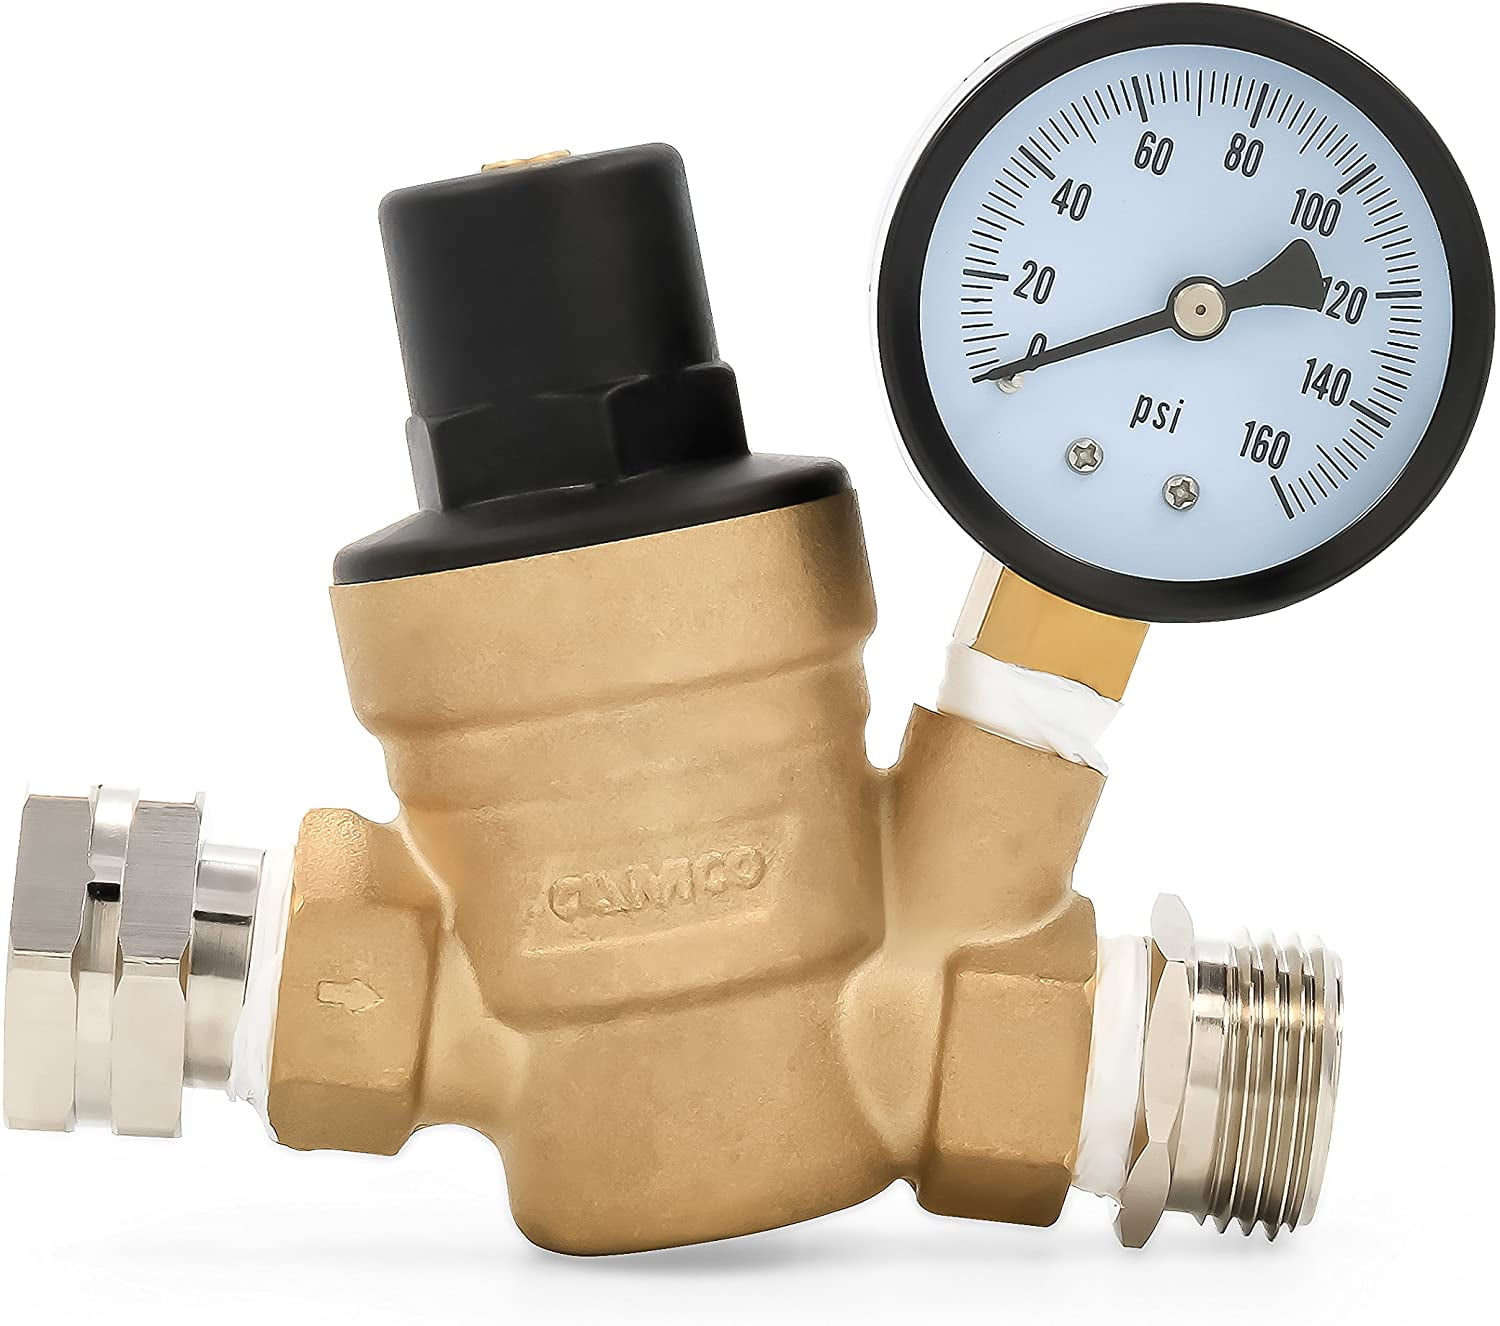 Helps Prevent Damage To Camco 40058 Adjustable Brass Water Pressure Regulator